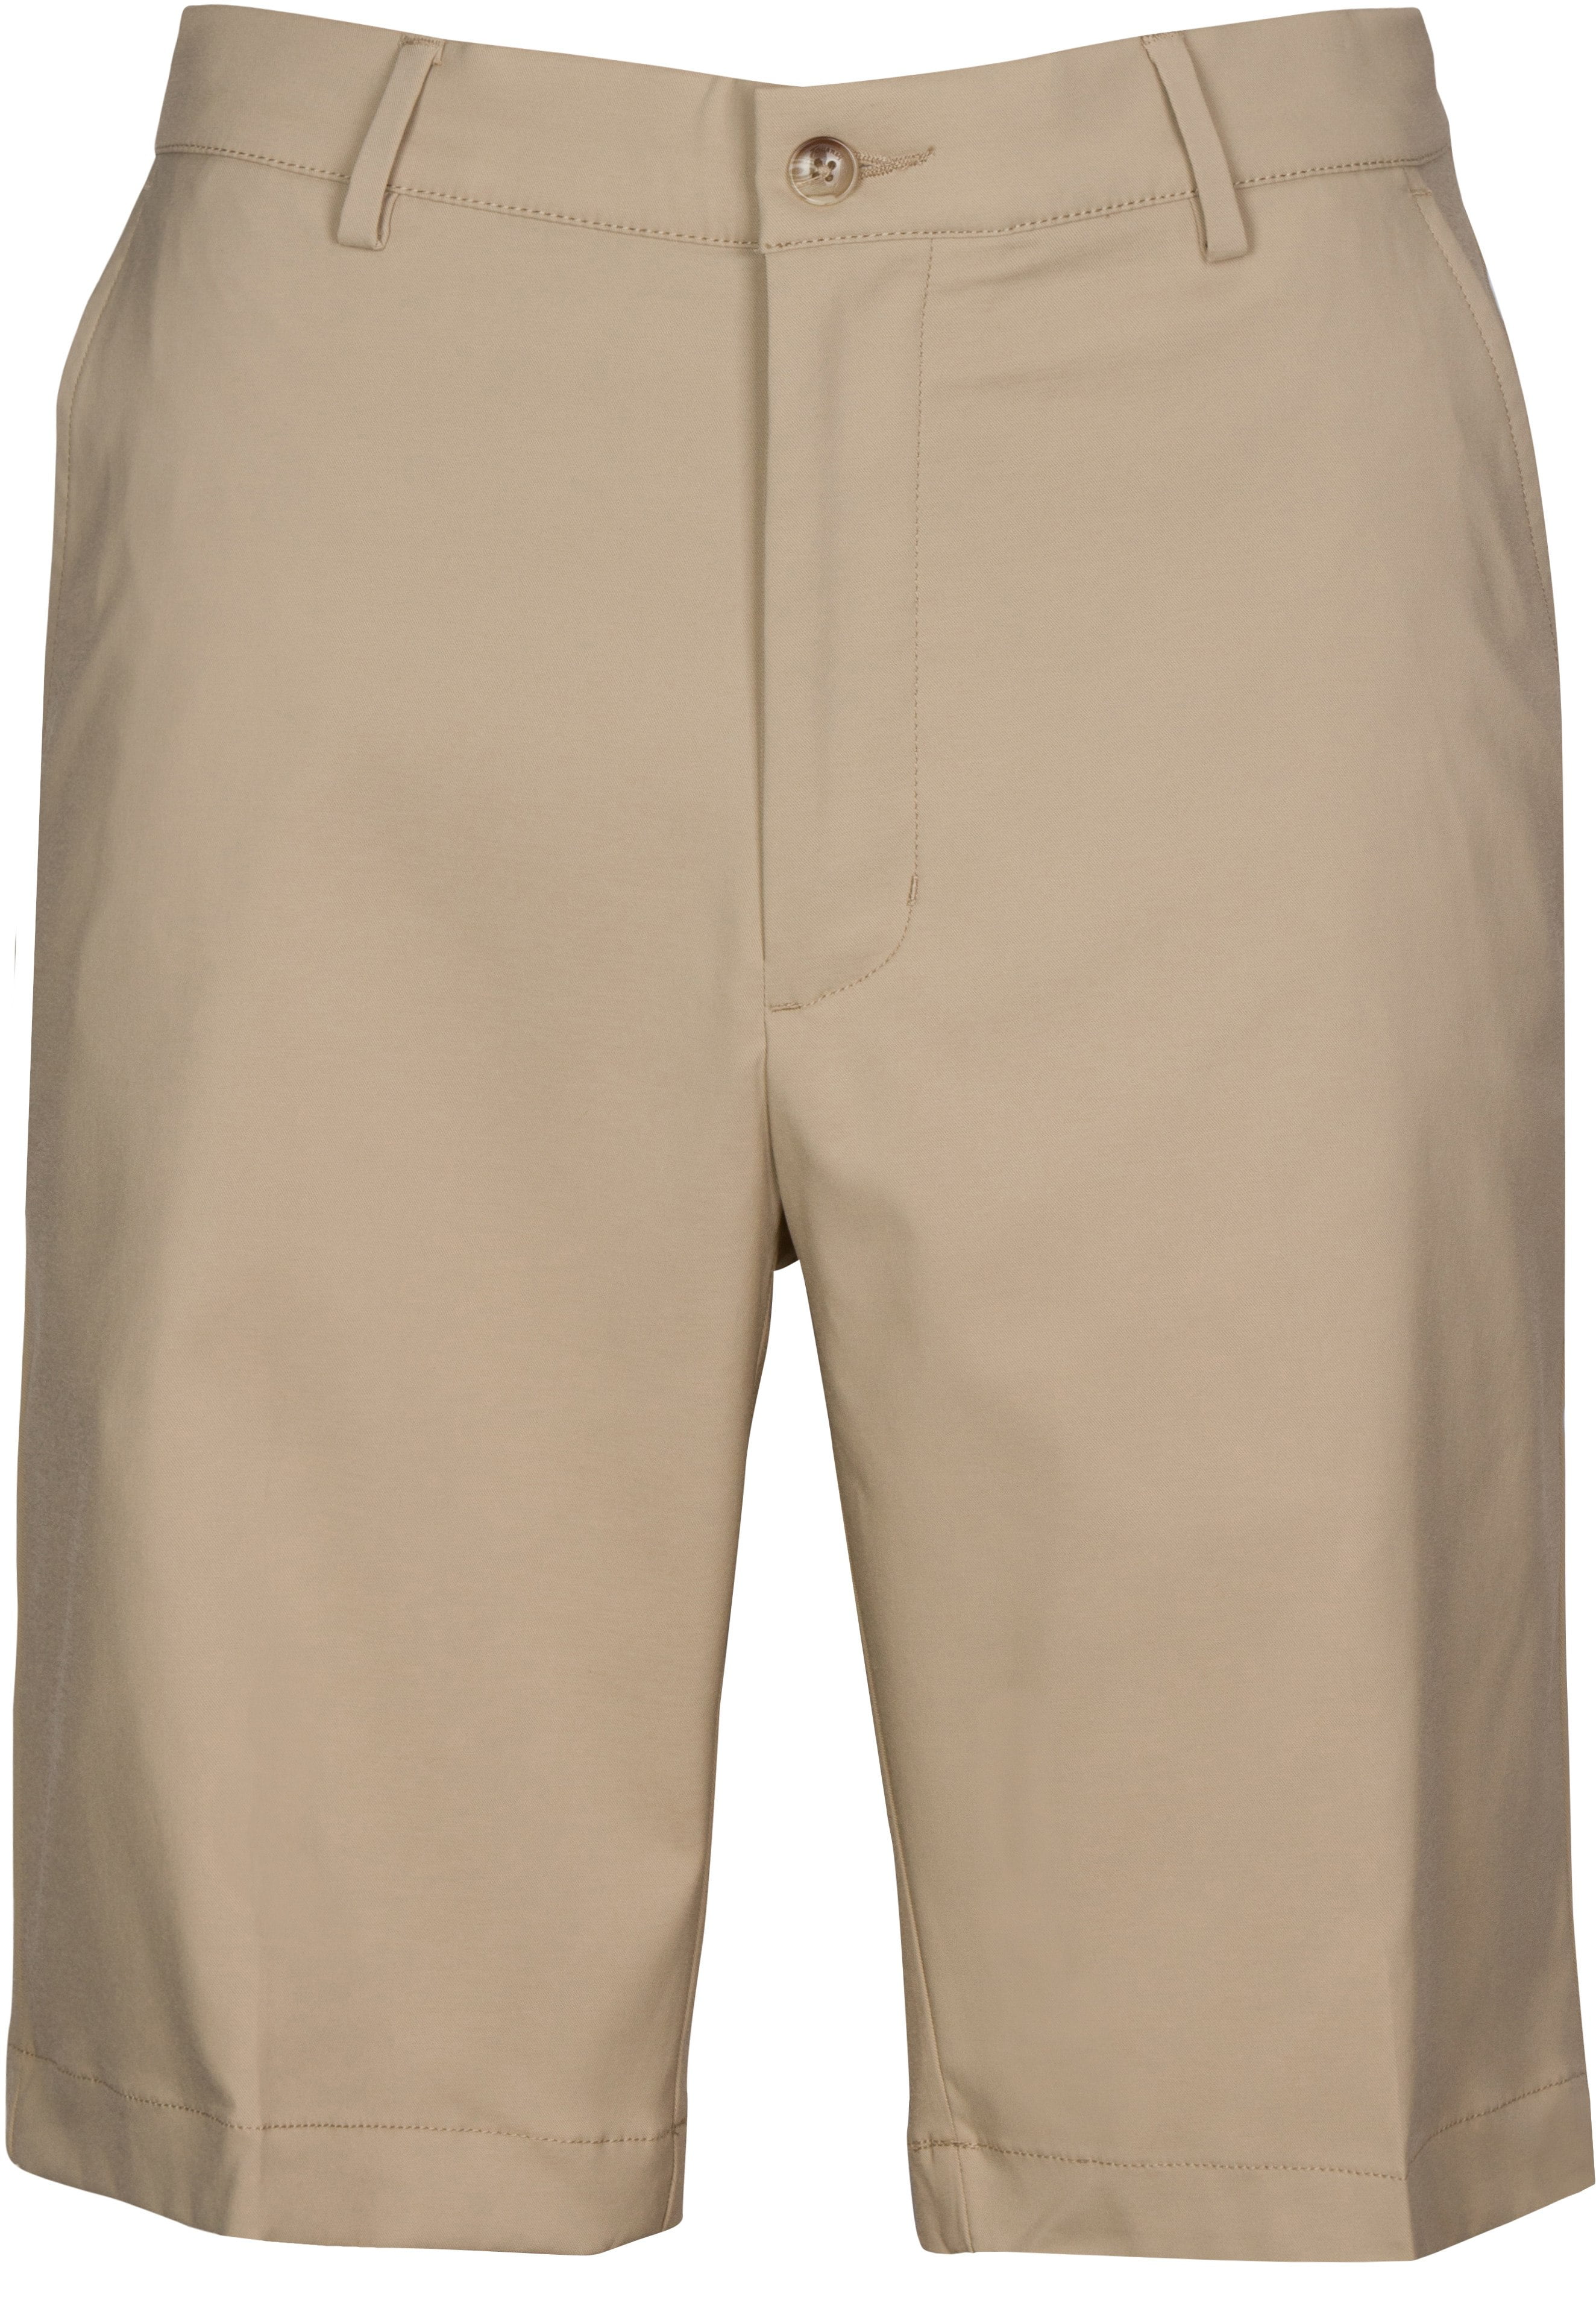 Tourney Men's Solid Tech Flat Front Performance Golf Shorts - Walmart.com